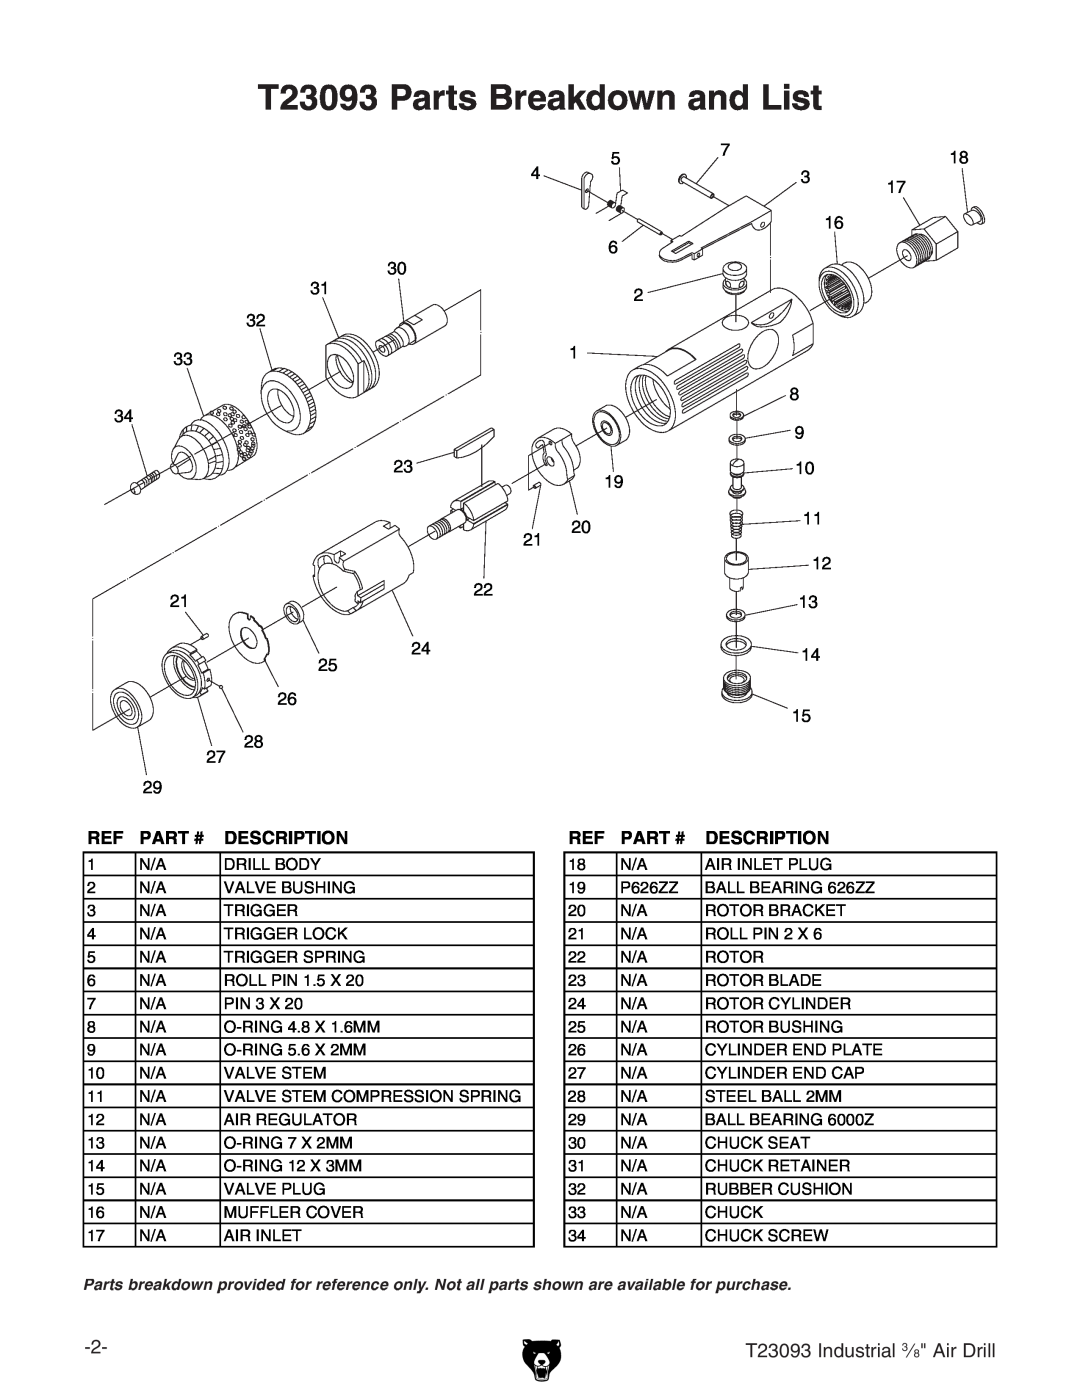 Grizzly specifications T23093 Parts Breakdown and List, Part #, Description 